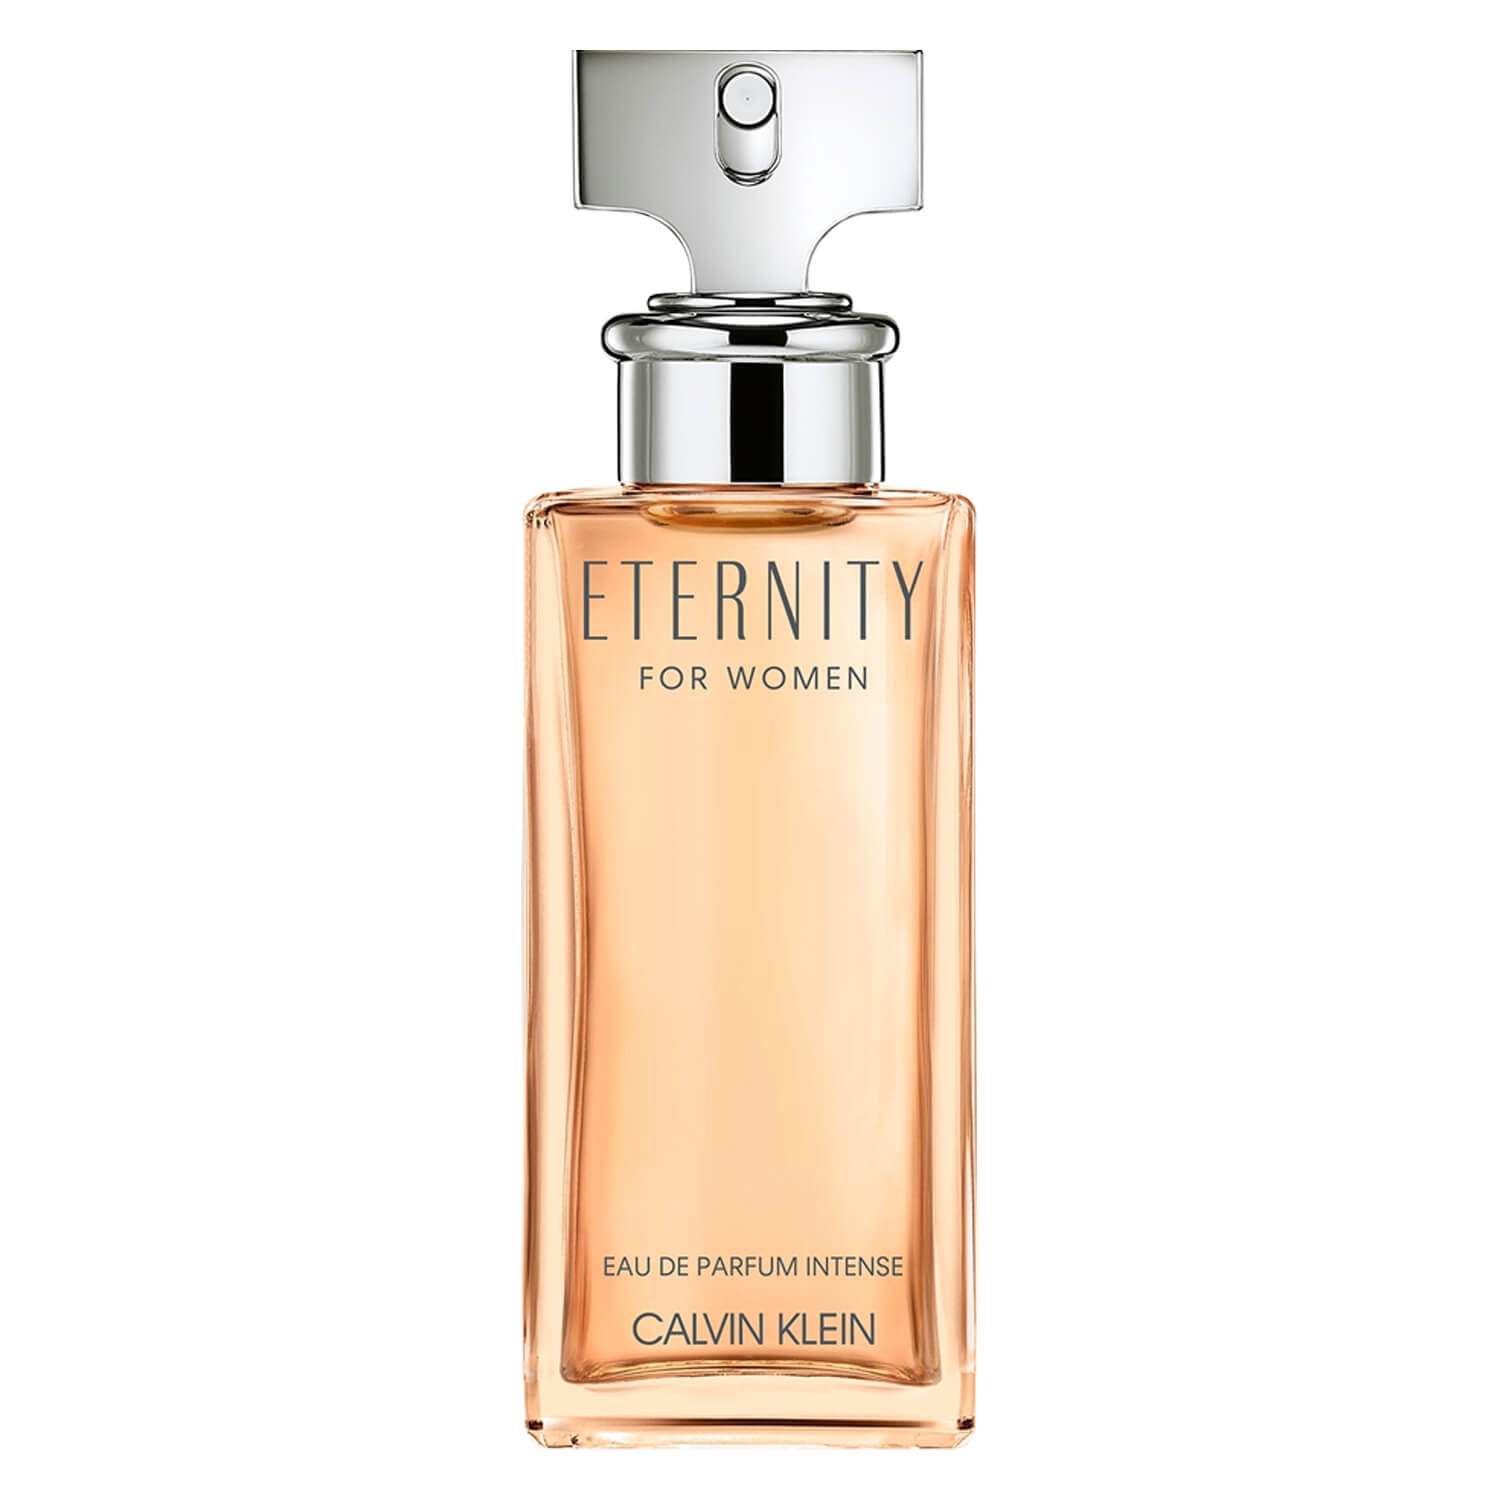 Produktbild von Eternity - Eau de Parfum Intense